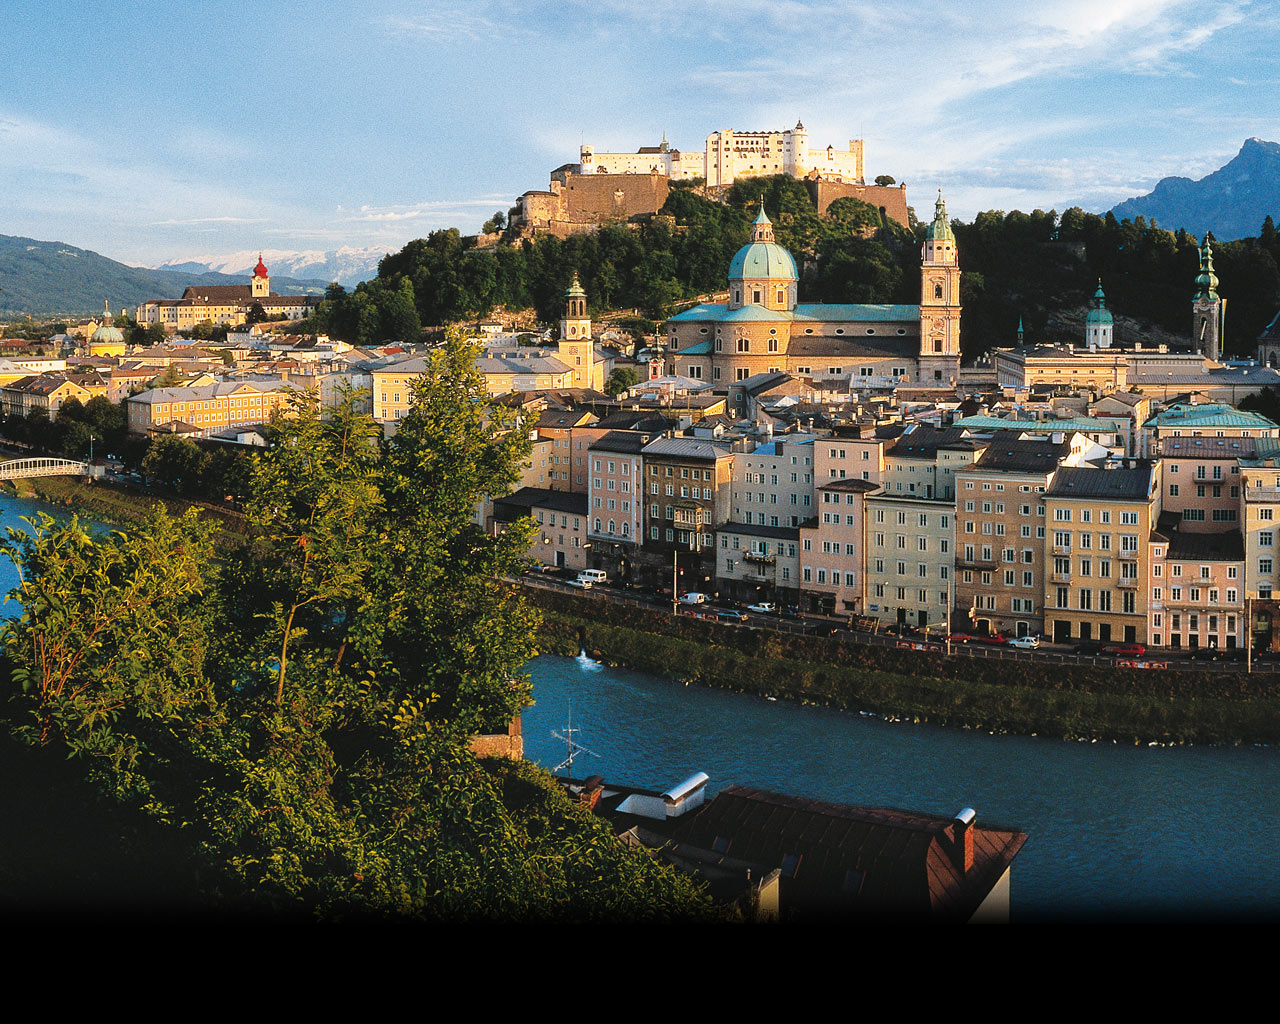 Stadt Salzburg by salzburg.com